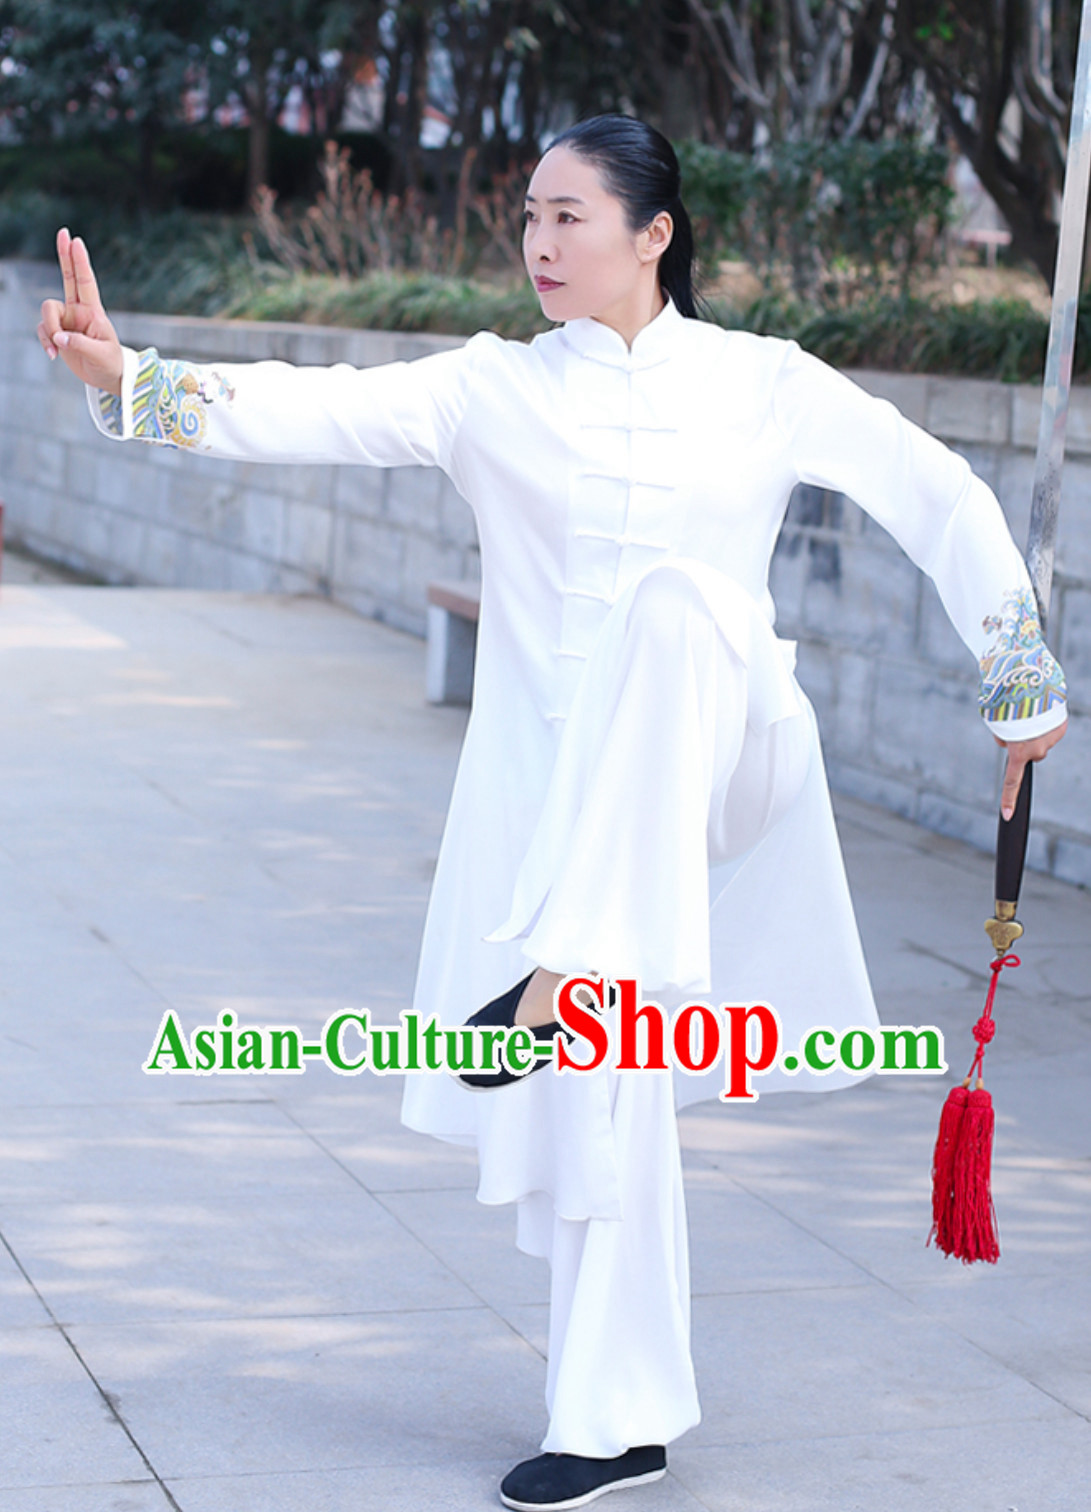 Top Chinese Traditional Competition Championship Tai Chi Taiji Kung Fu Wing Chun Kungfu Tai Ji Sword Gong Fu Master Suits Clothes Complete Set